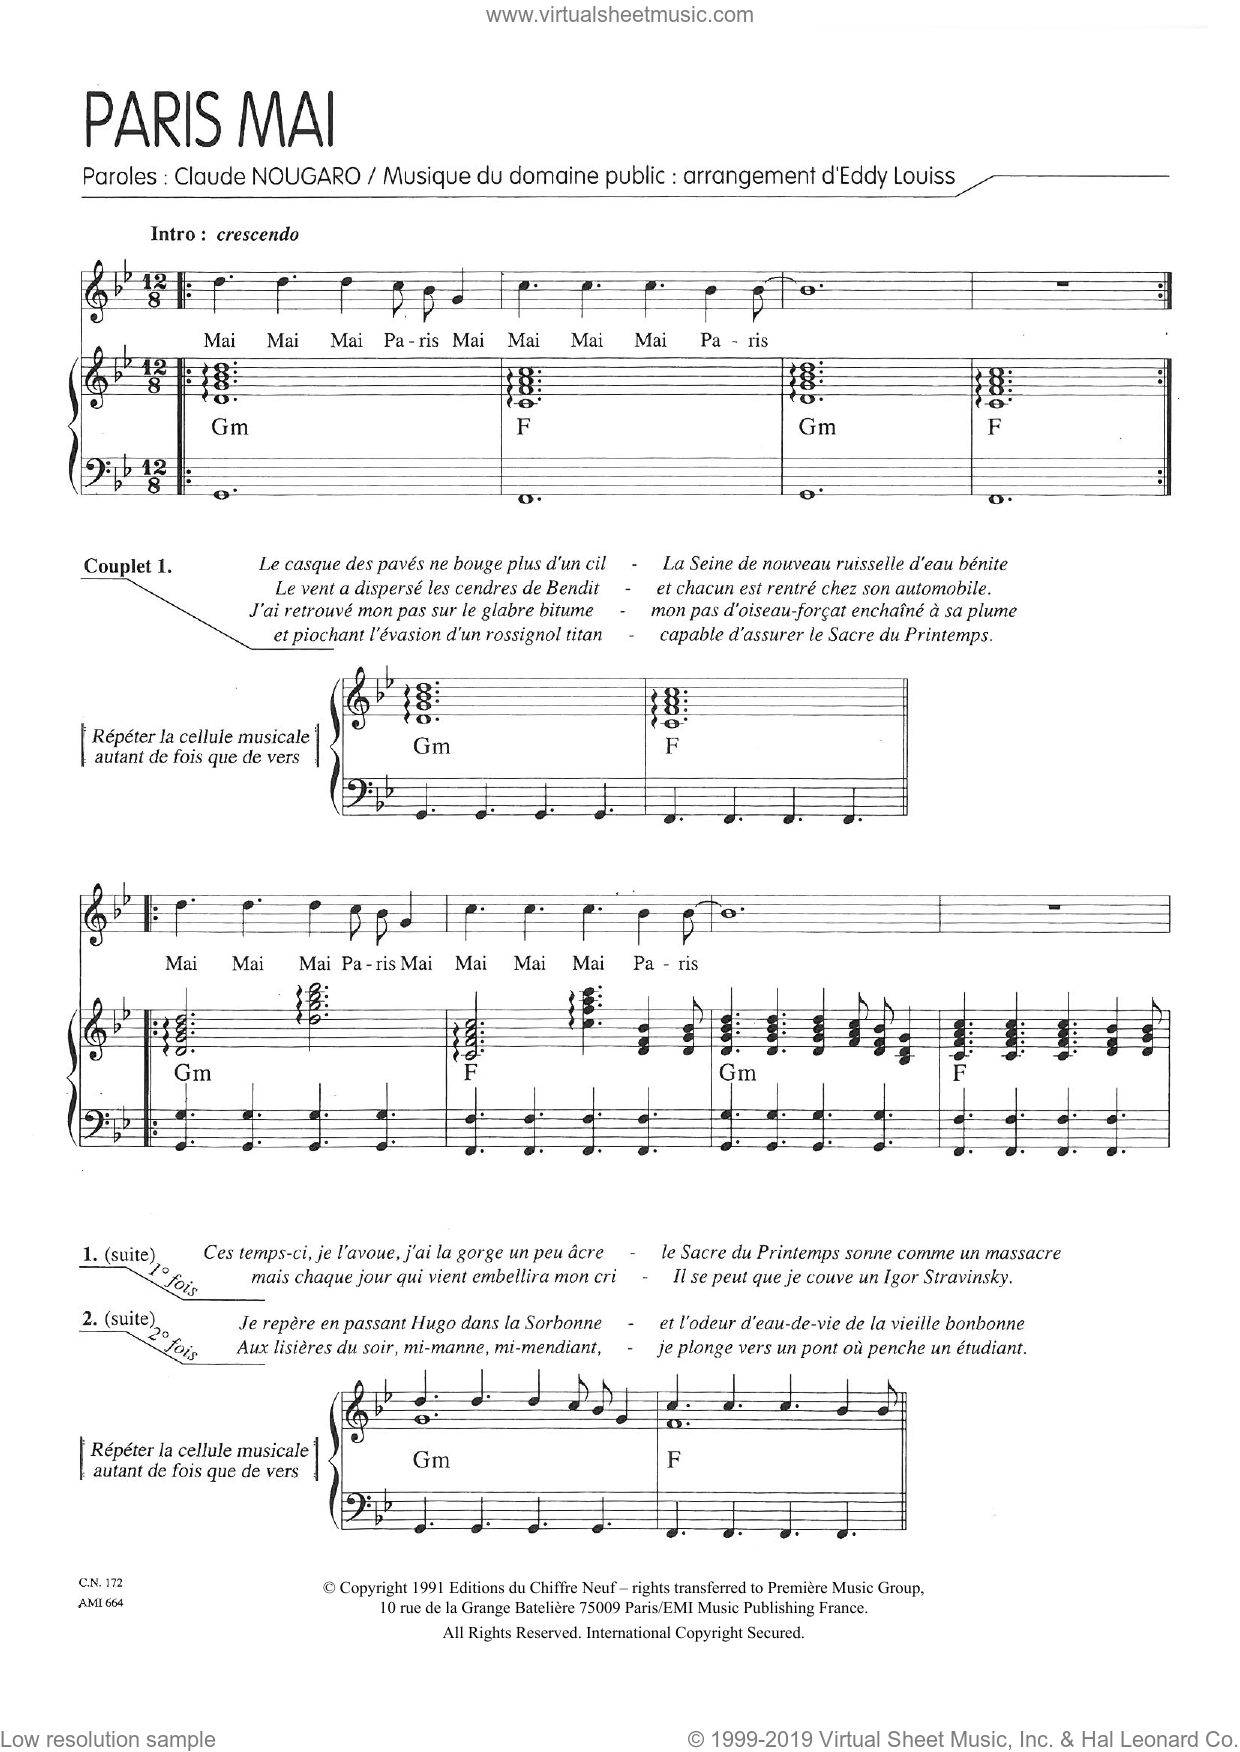 Nougaro Paris Mai Sheet Music For Voice And Piano Pdf